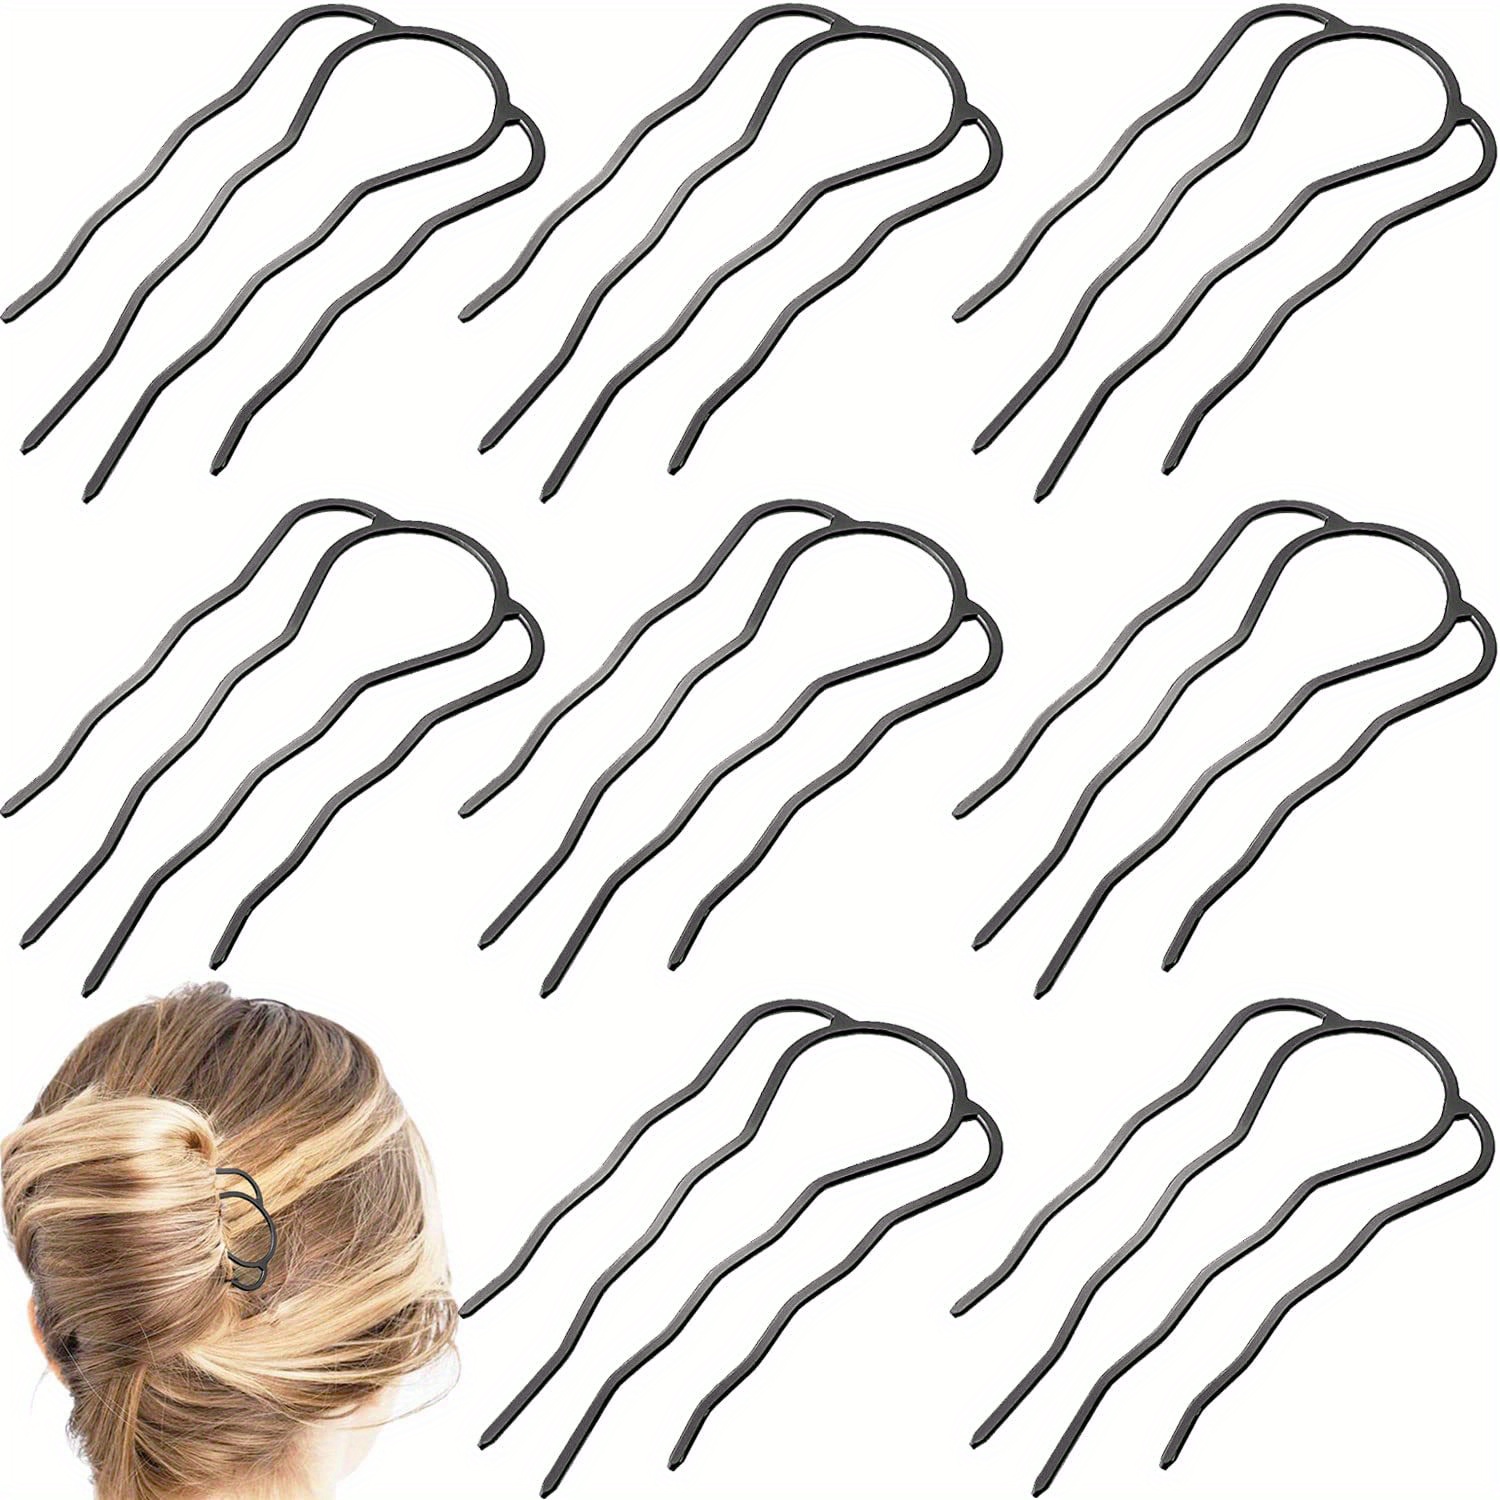 

8 Pcs Hair Side Combs, Metal Hair Fork Clip Hair Pins For Buns 4 Prong Hair Updo U-shape Hair Sticks For Women Hair Styling Tool Accessories